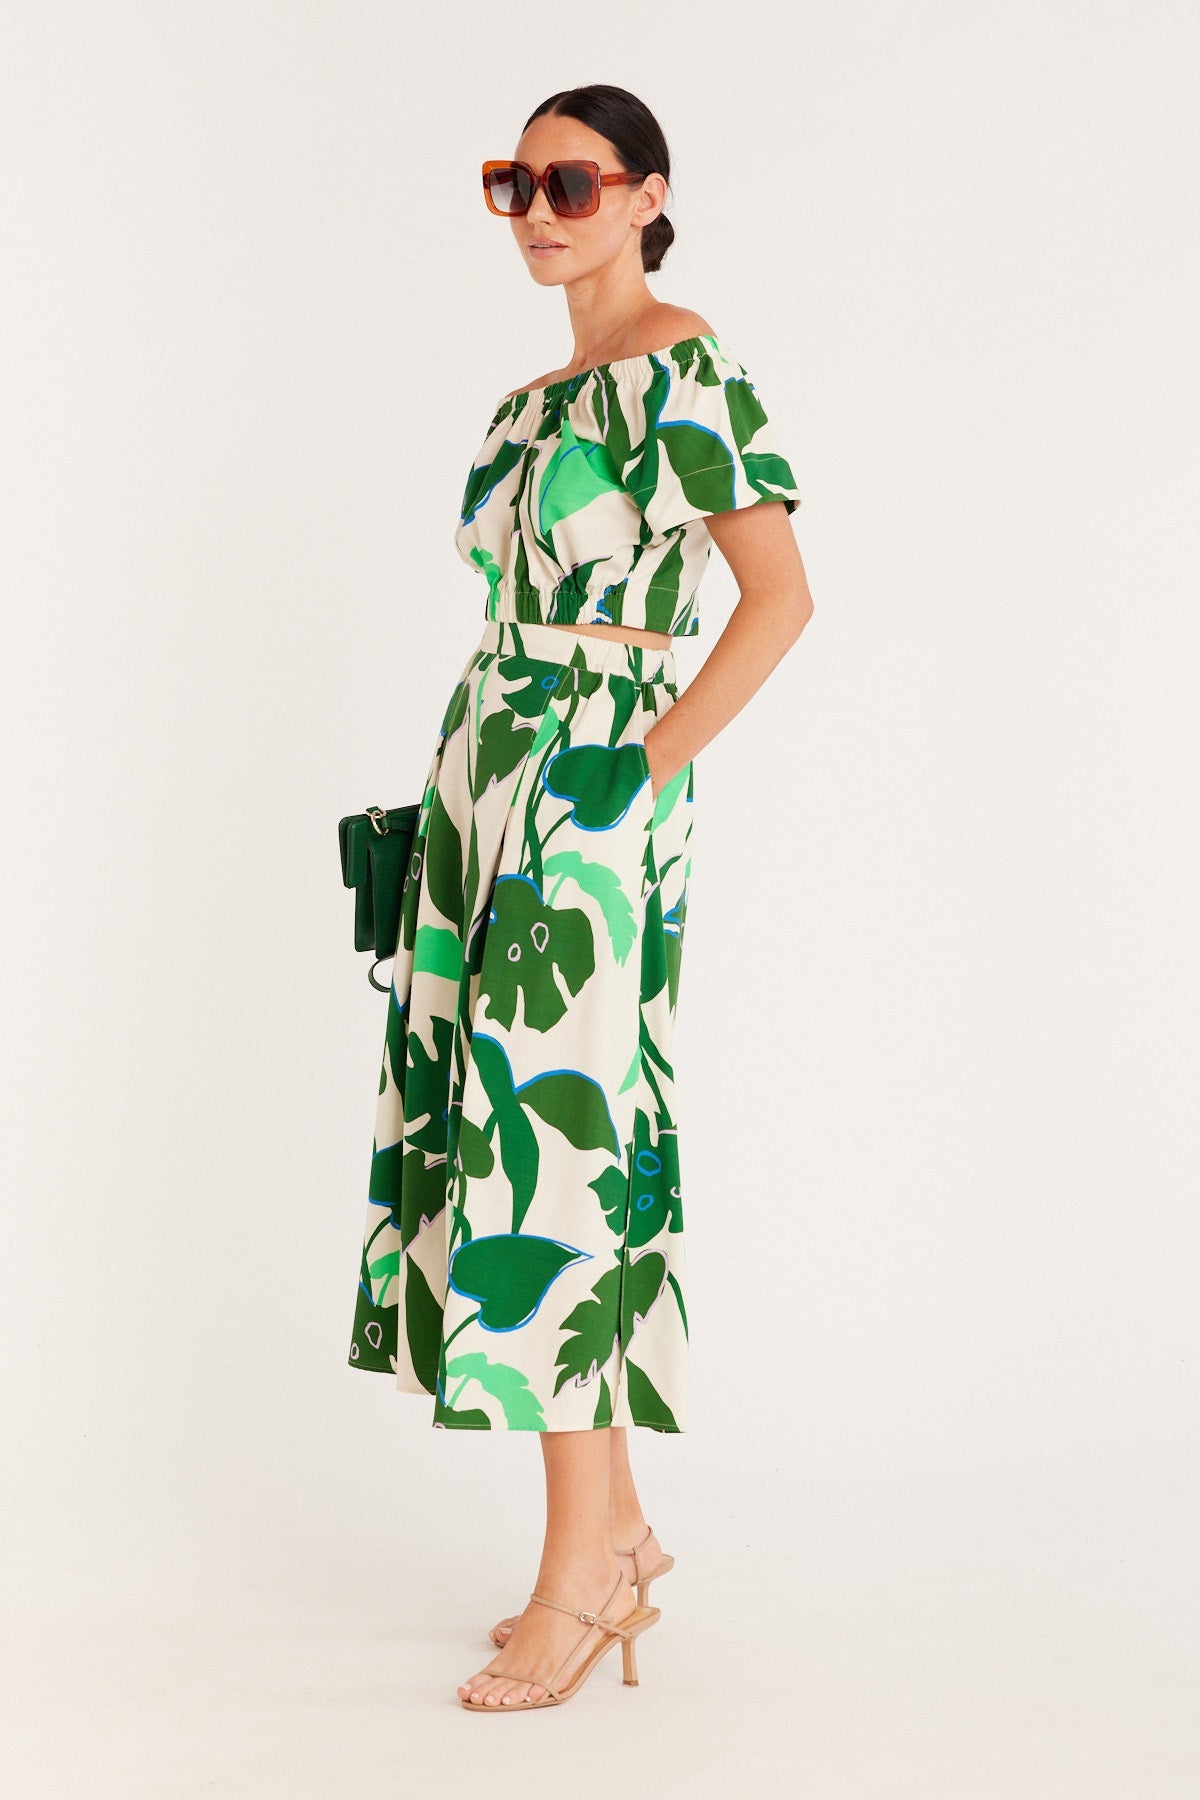 Shop Hayman Skirt | Green Palm Print - Cable Melbourne